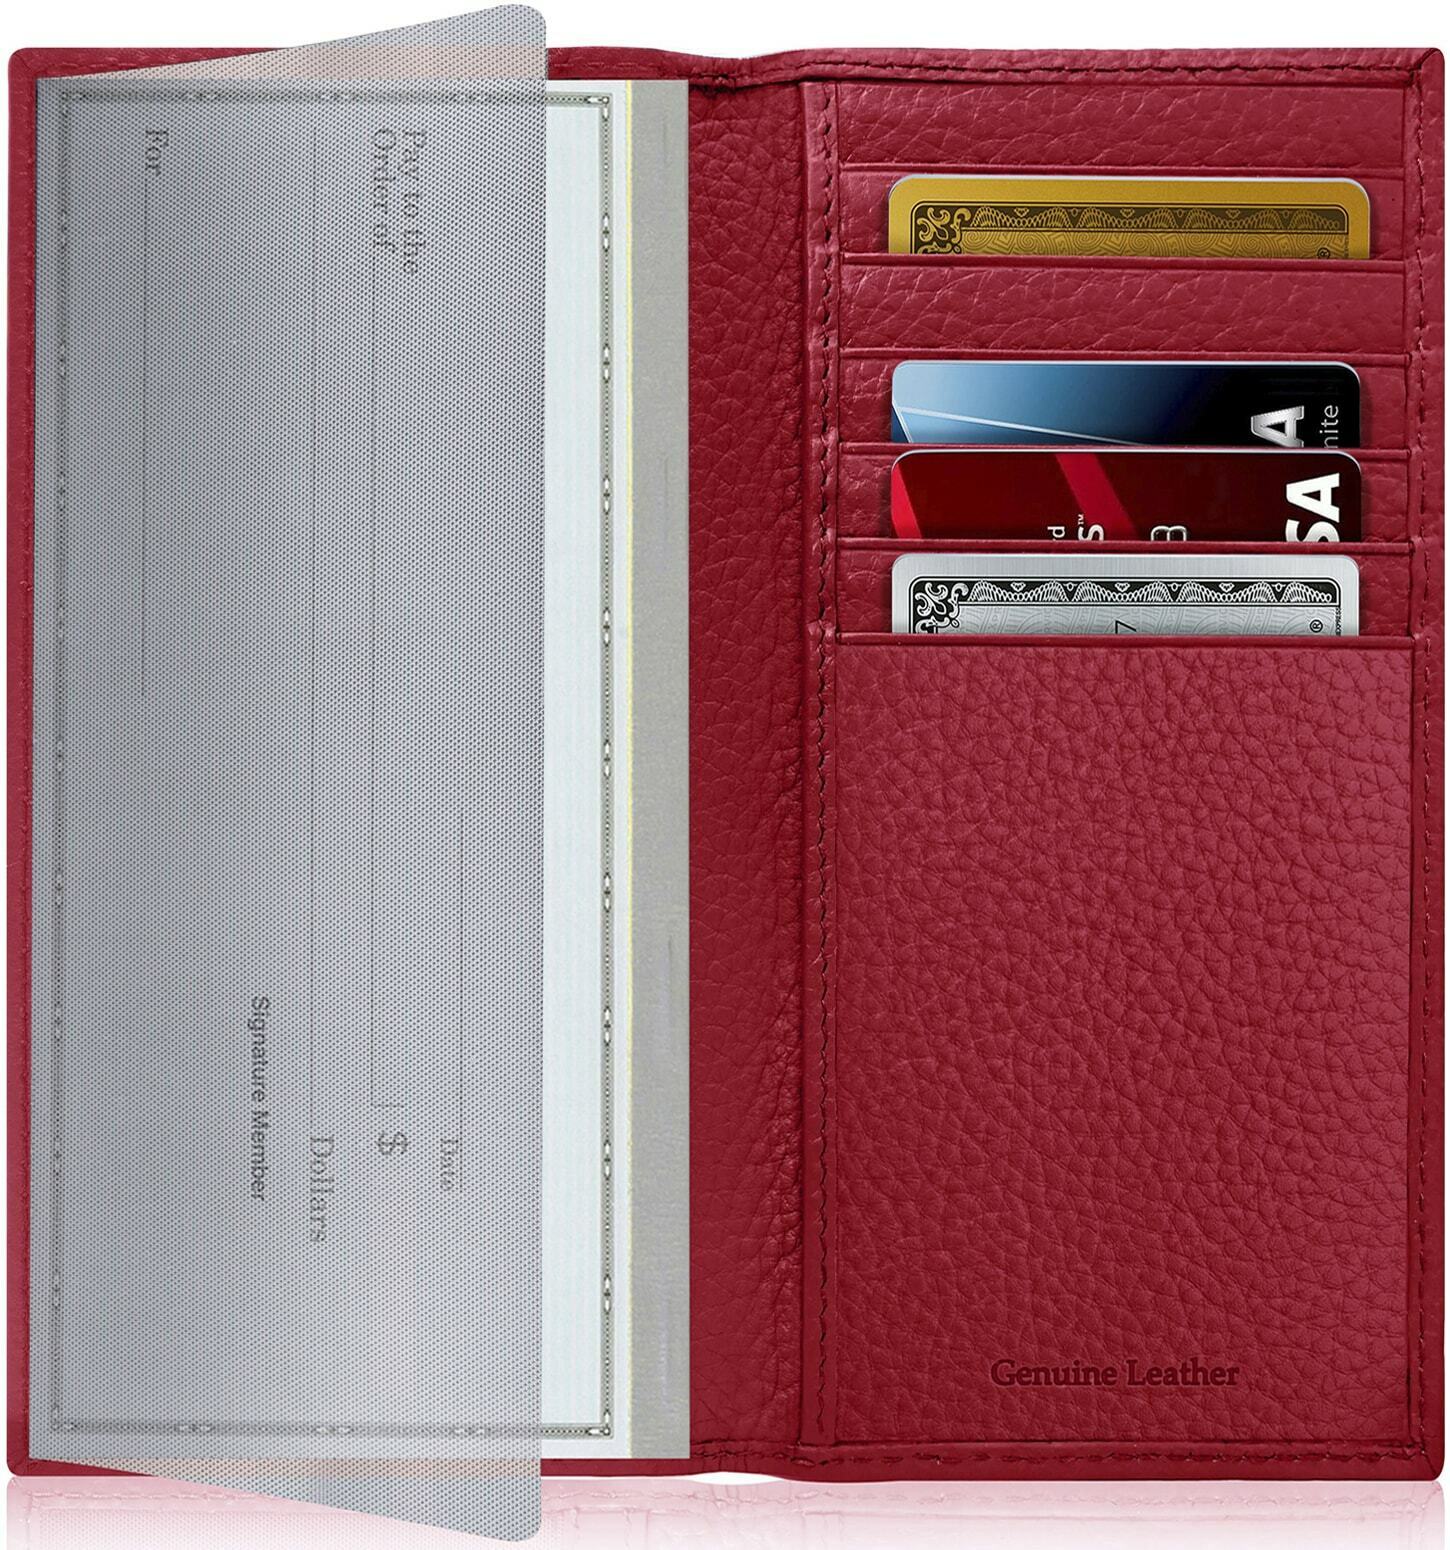 New Genuine Leather Checkbook Cover Card Holder Wallet Unisex Rfid Blocking